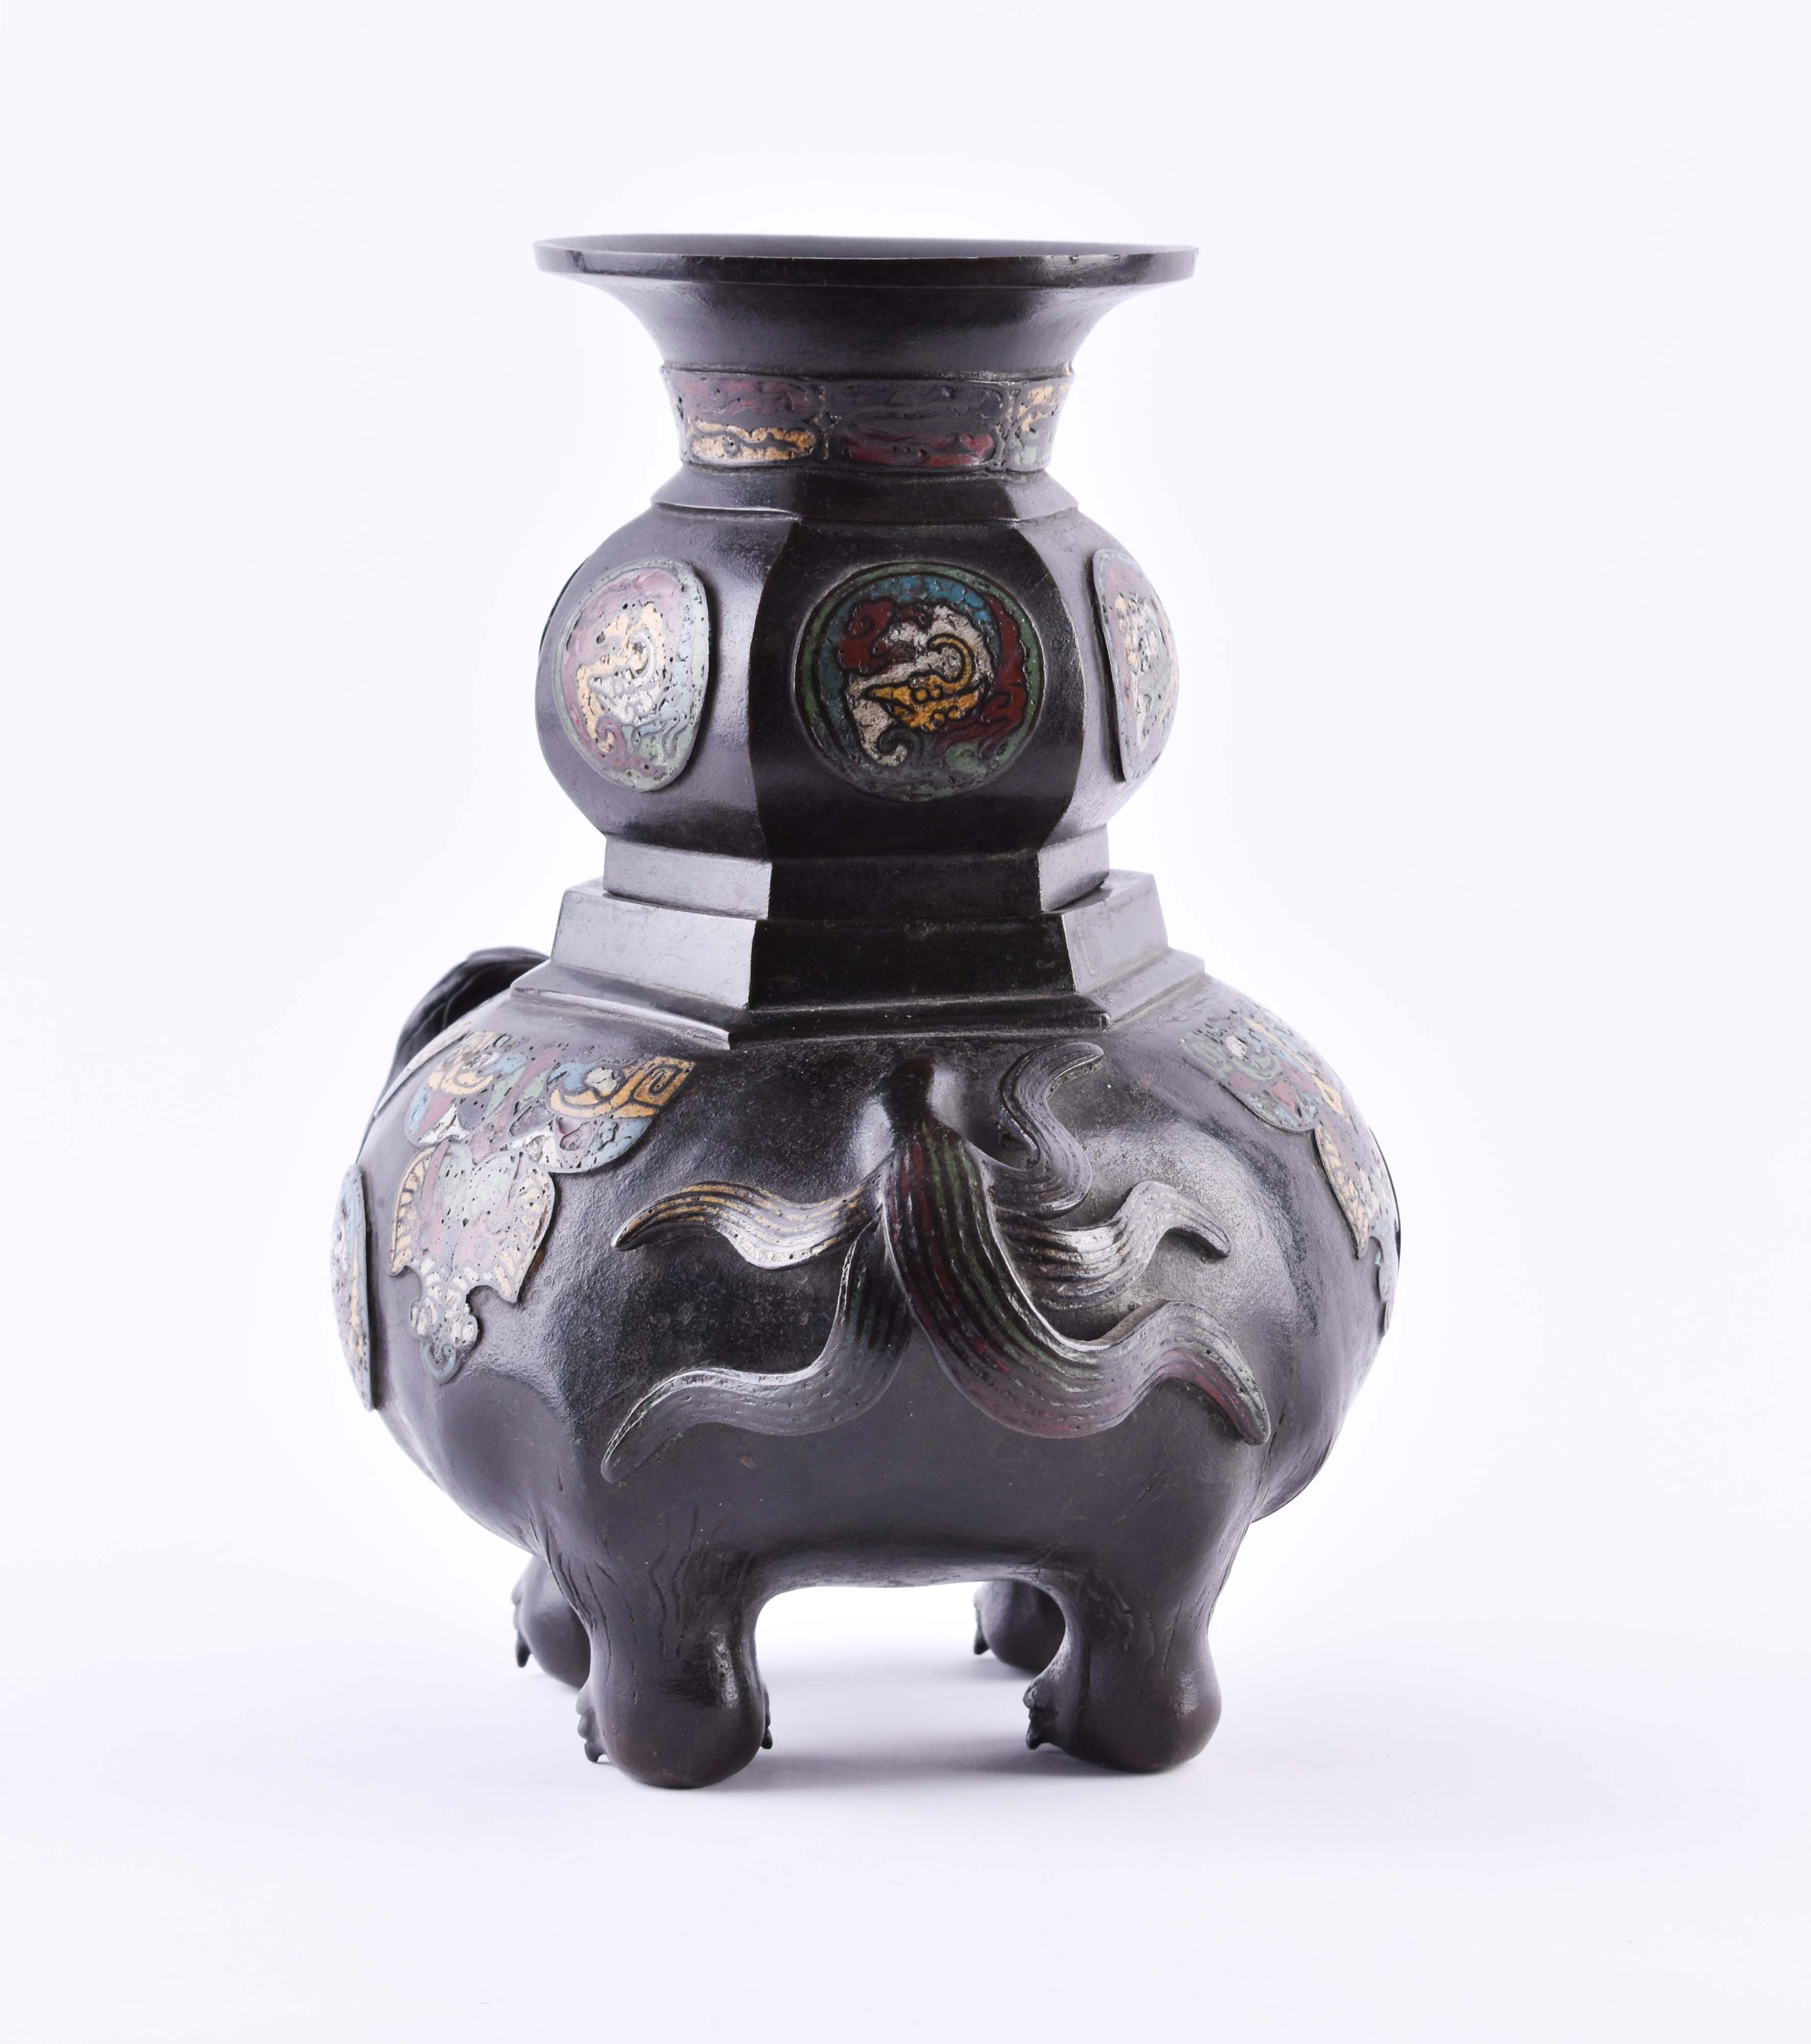  Figurative cloisonne Koro China Qing dynasty - Image 7 of 10